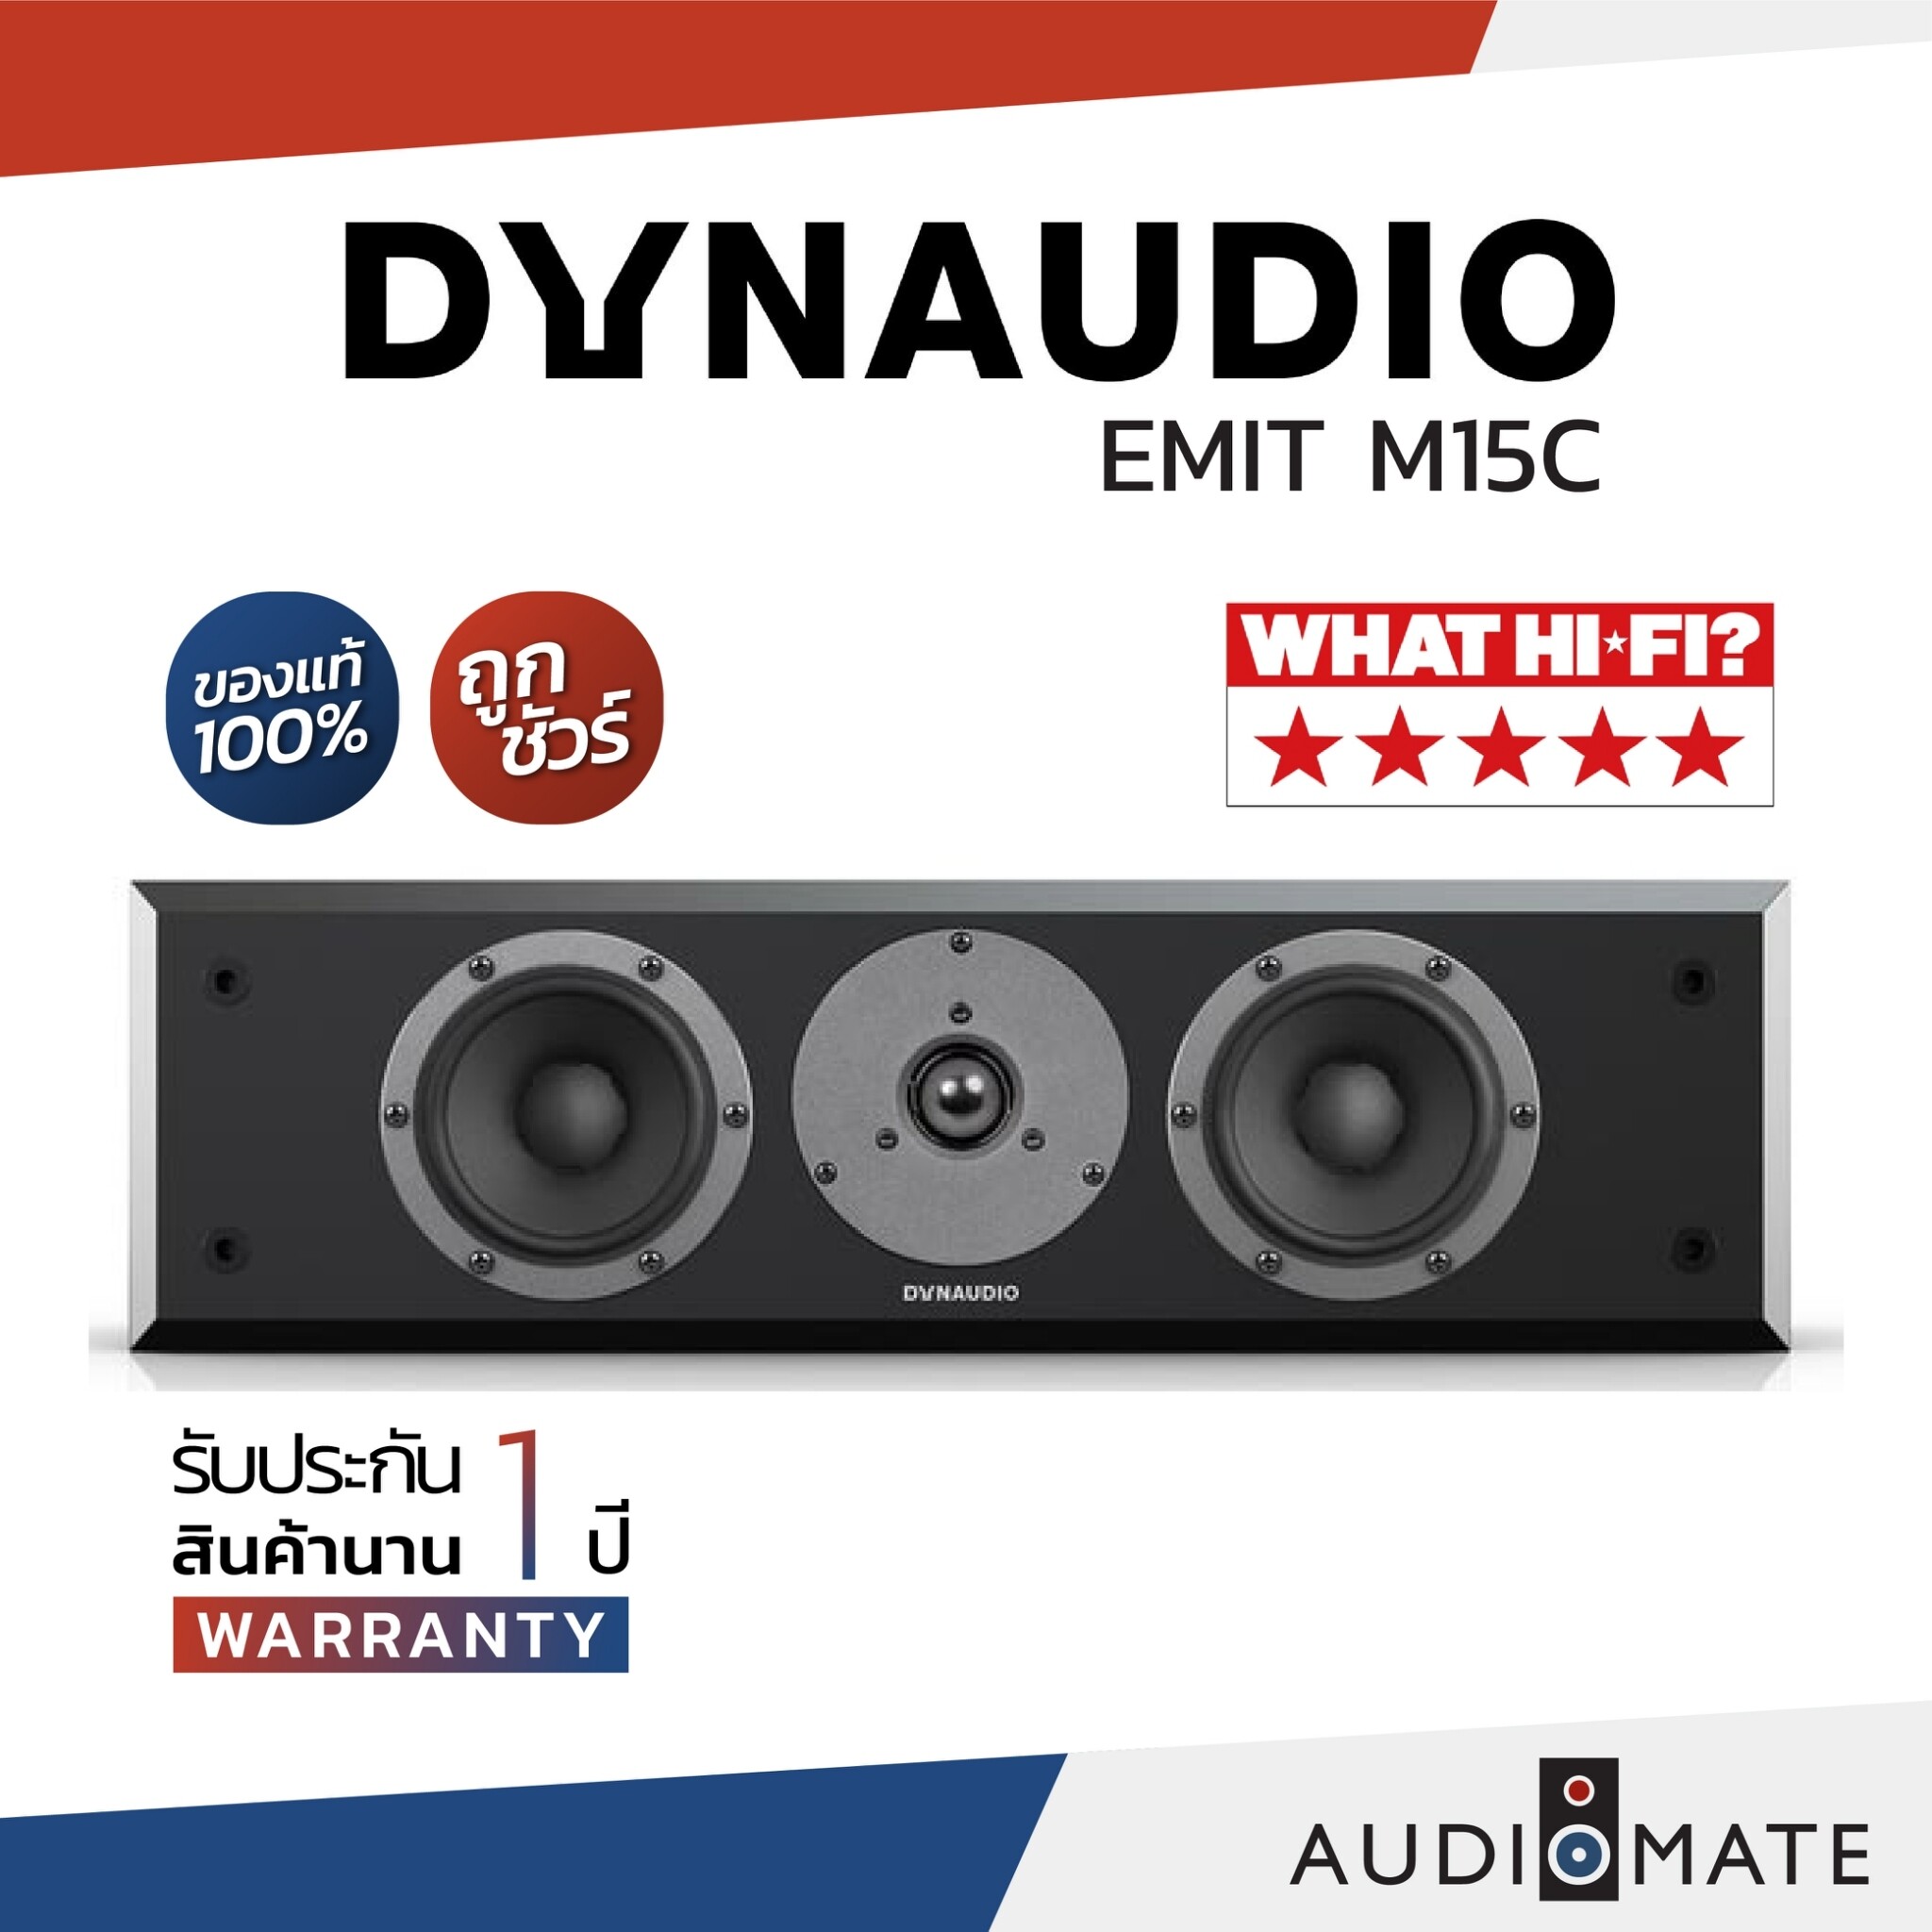 DYNAUDIO EMIT M15C Speaker / ลําโพง Center ยี่ห้อ Dynaudio รุ่น Emit M15C / สี ดํา / รับประกัน 1 ปี โดย บริษัท Bulldog Audio / AUDIOMATE